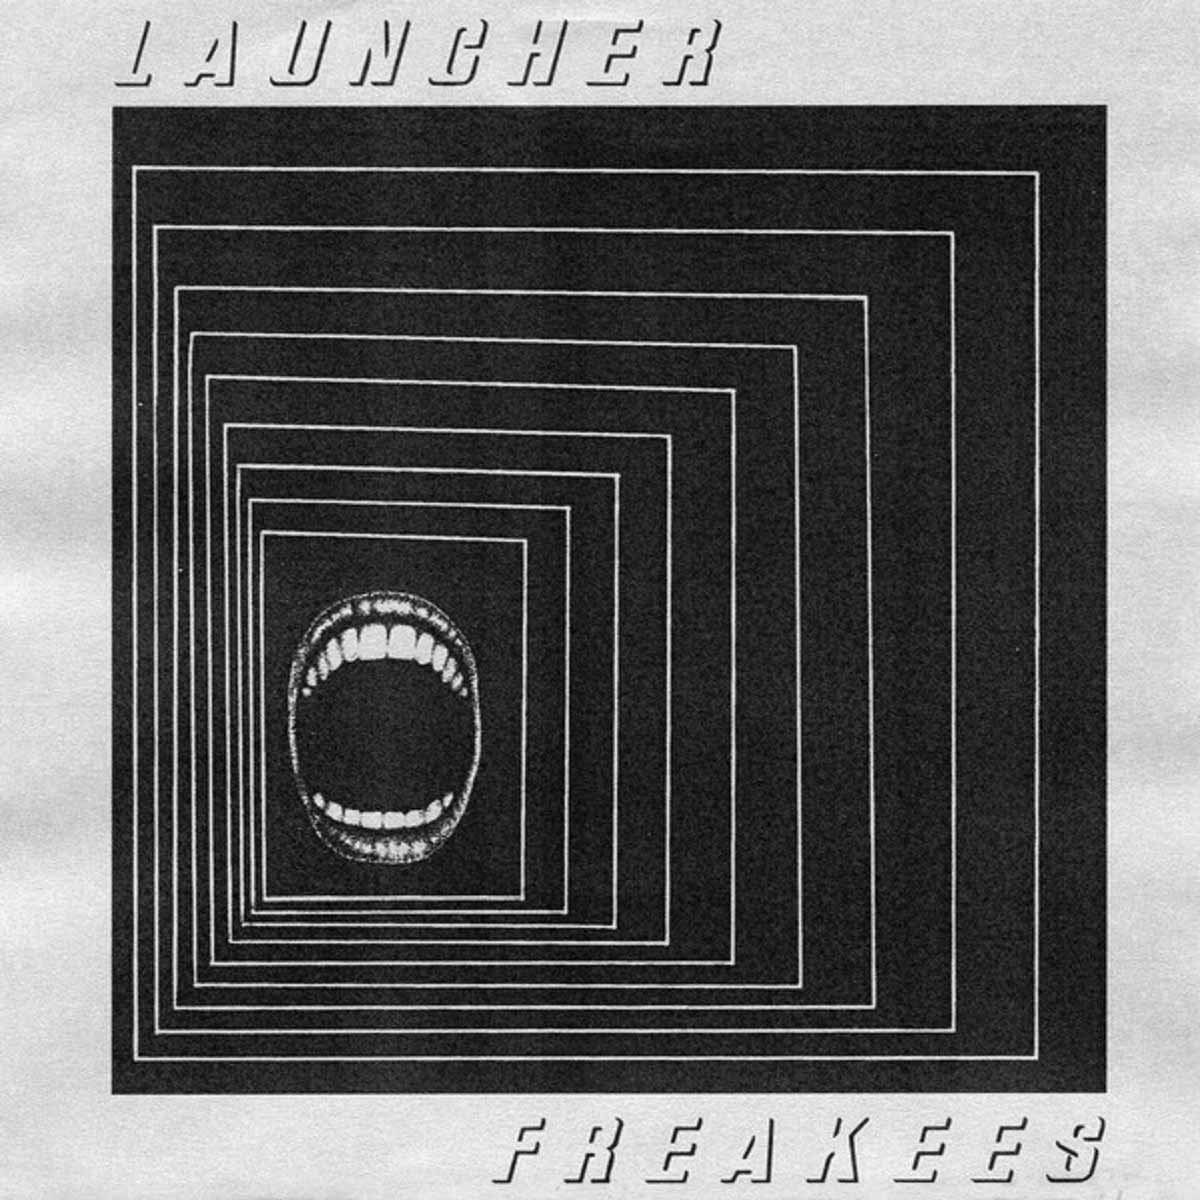 Launcher / Freakees-  Split 7” ~RARE METALLIC SILVER COVER LTD TO 50 COPIES!